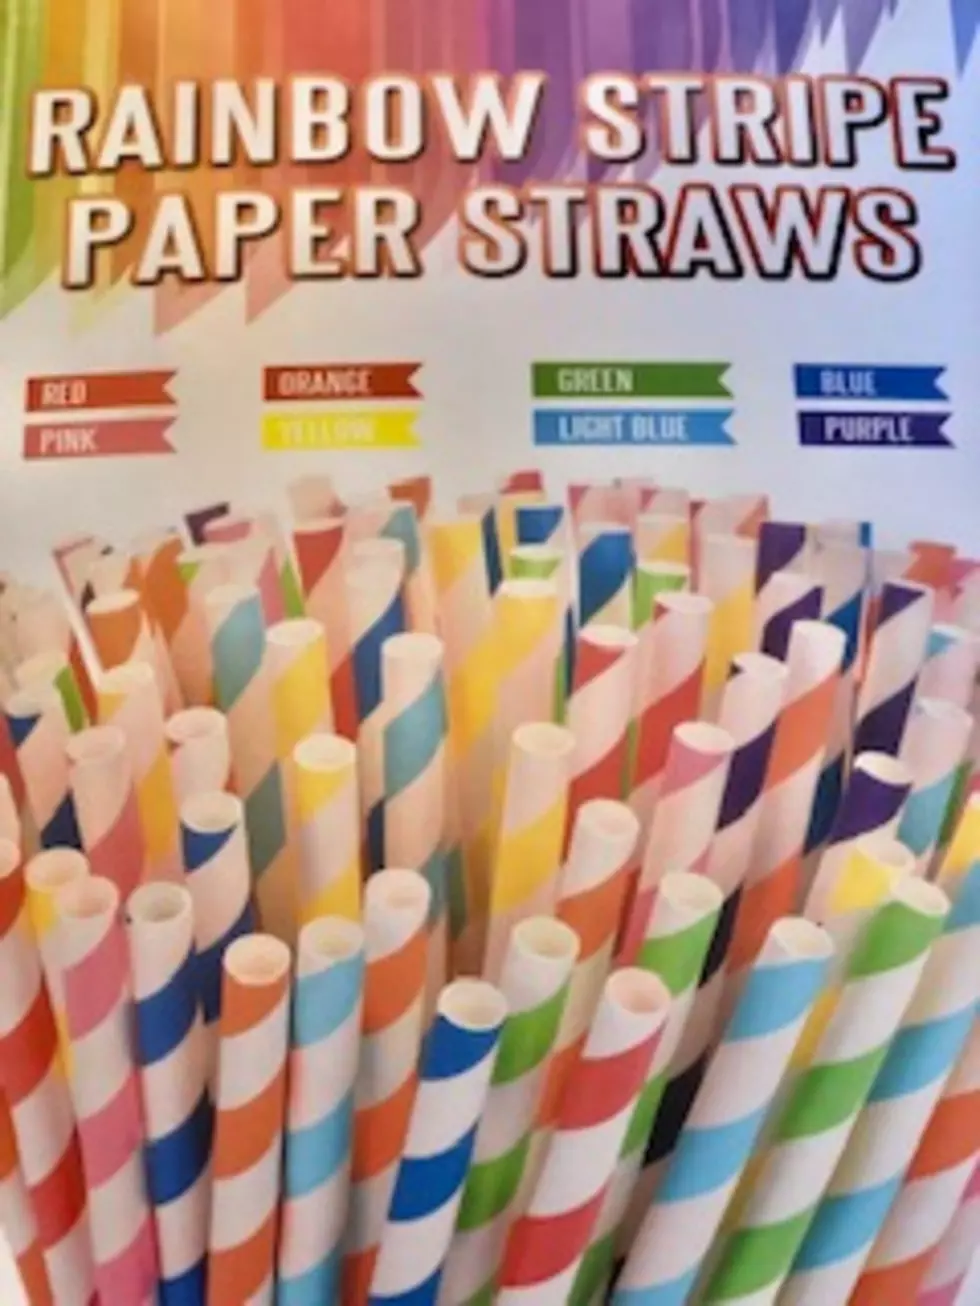 I Hate Paper Straws! There, I Said It&#8230;